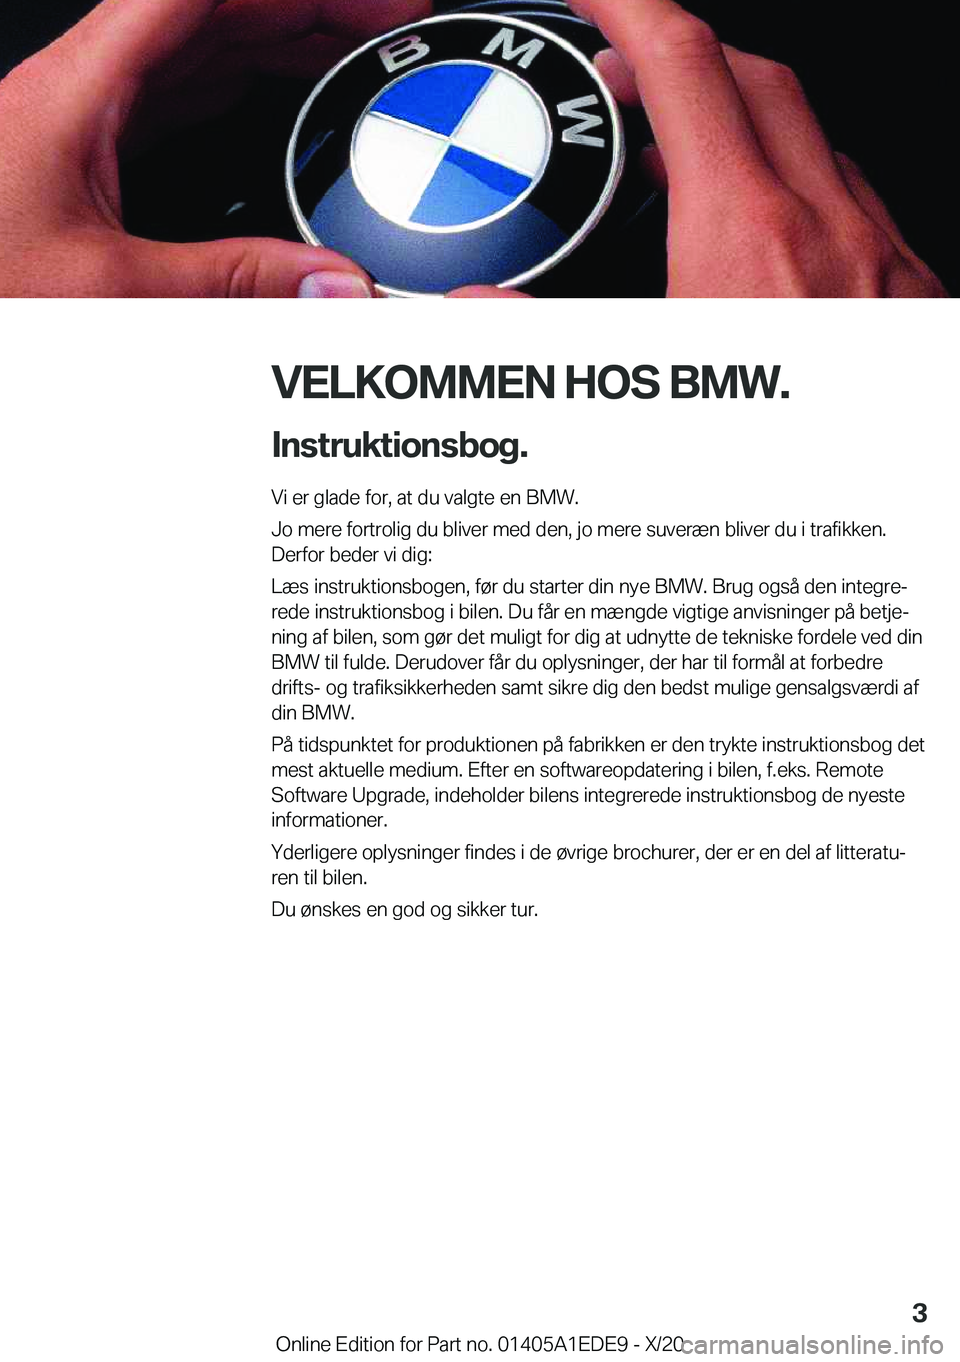 BMW 8 SERIES CONVERTIBLE 2021  InstruktionsbØger (in Danish) �V�E�L�K�O�M�M�E�N��H�O�S��B�M�W�.
�I�n�s�t�r�u�k�t�i�o�n�s�b�o�g�. �V�i��e�r��g�l�a�d�e��f�o�r�,��a�t��d�u��v�a�l�g�t�e��e�n��B�M�W�.
�J�o��m�e�r�e��f�o�r�t�r�o�l�i�g��d�u��b�l�i�v�e�r�